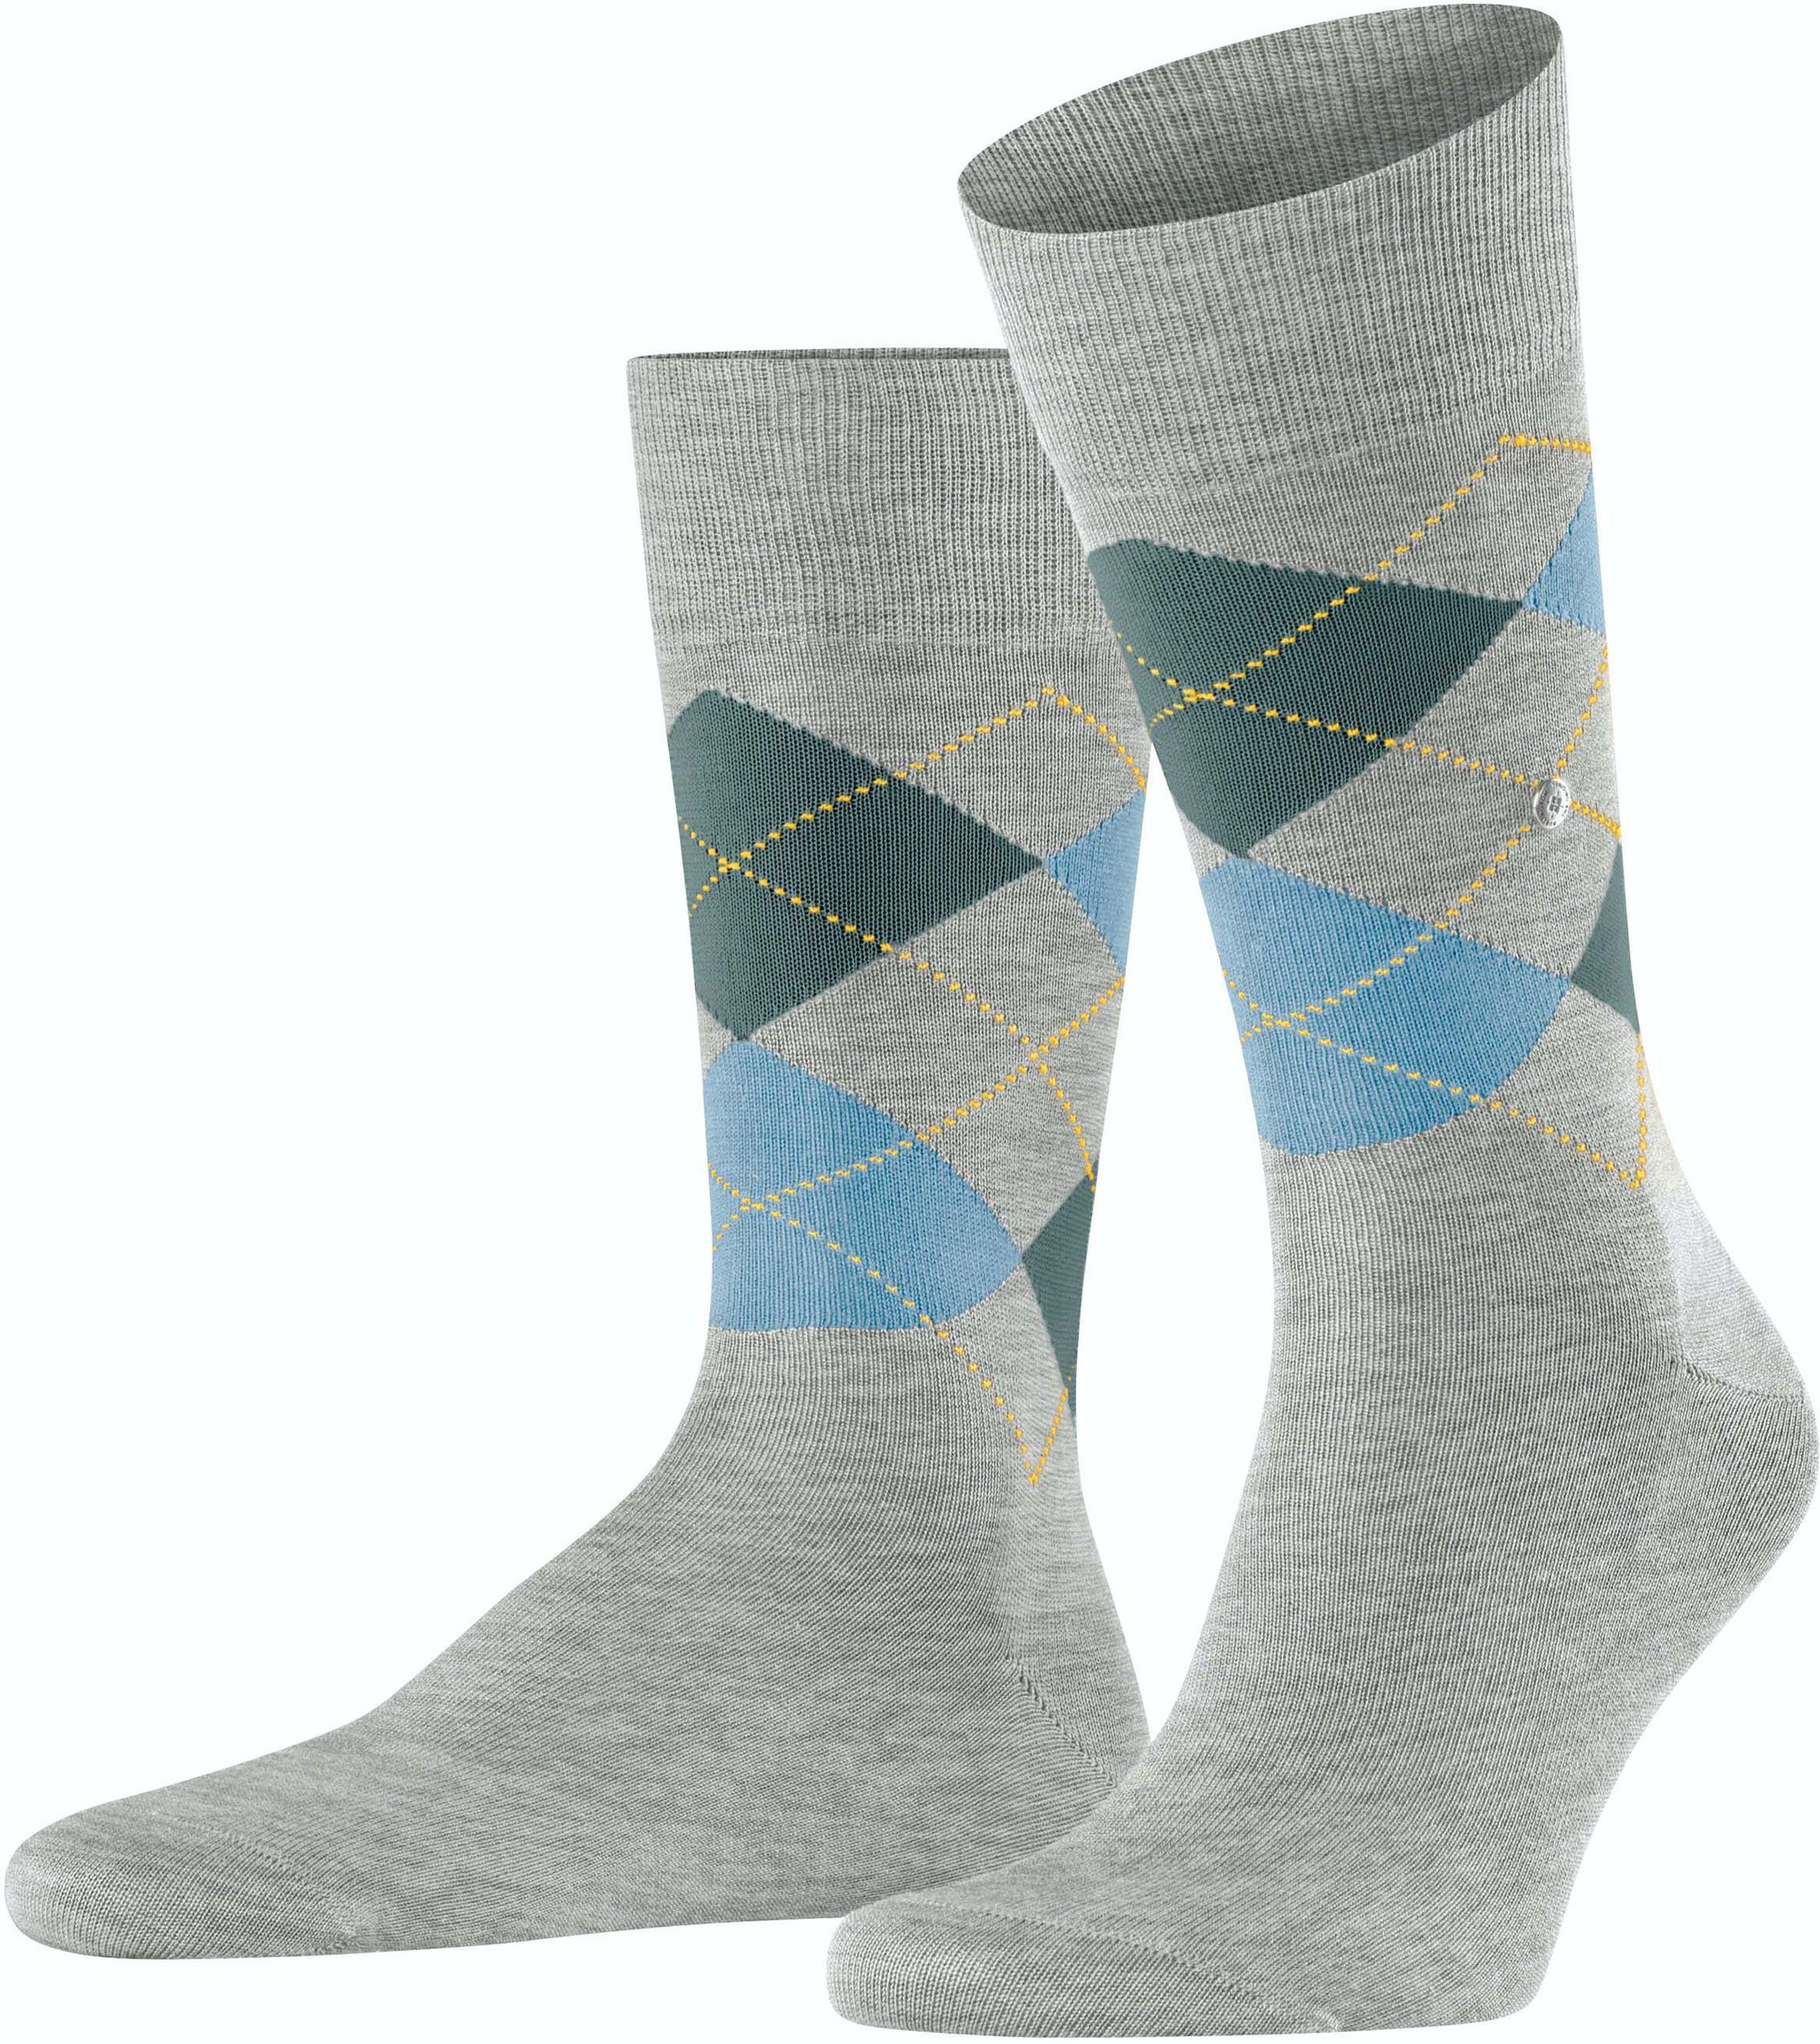 Burlington Socks Manchester 3640 Grey Multicolour size 40-46